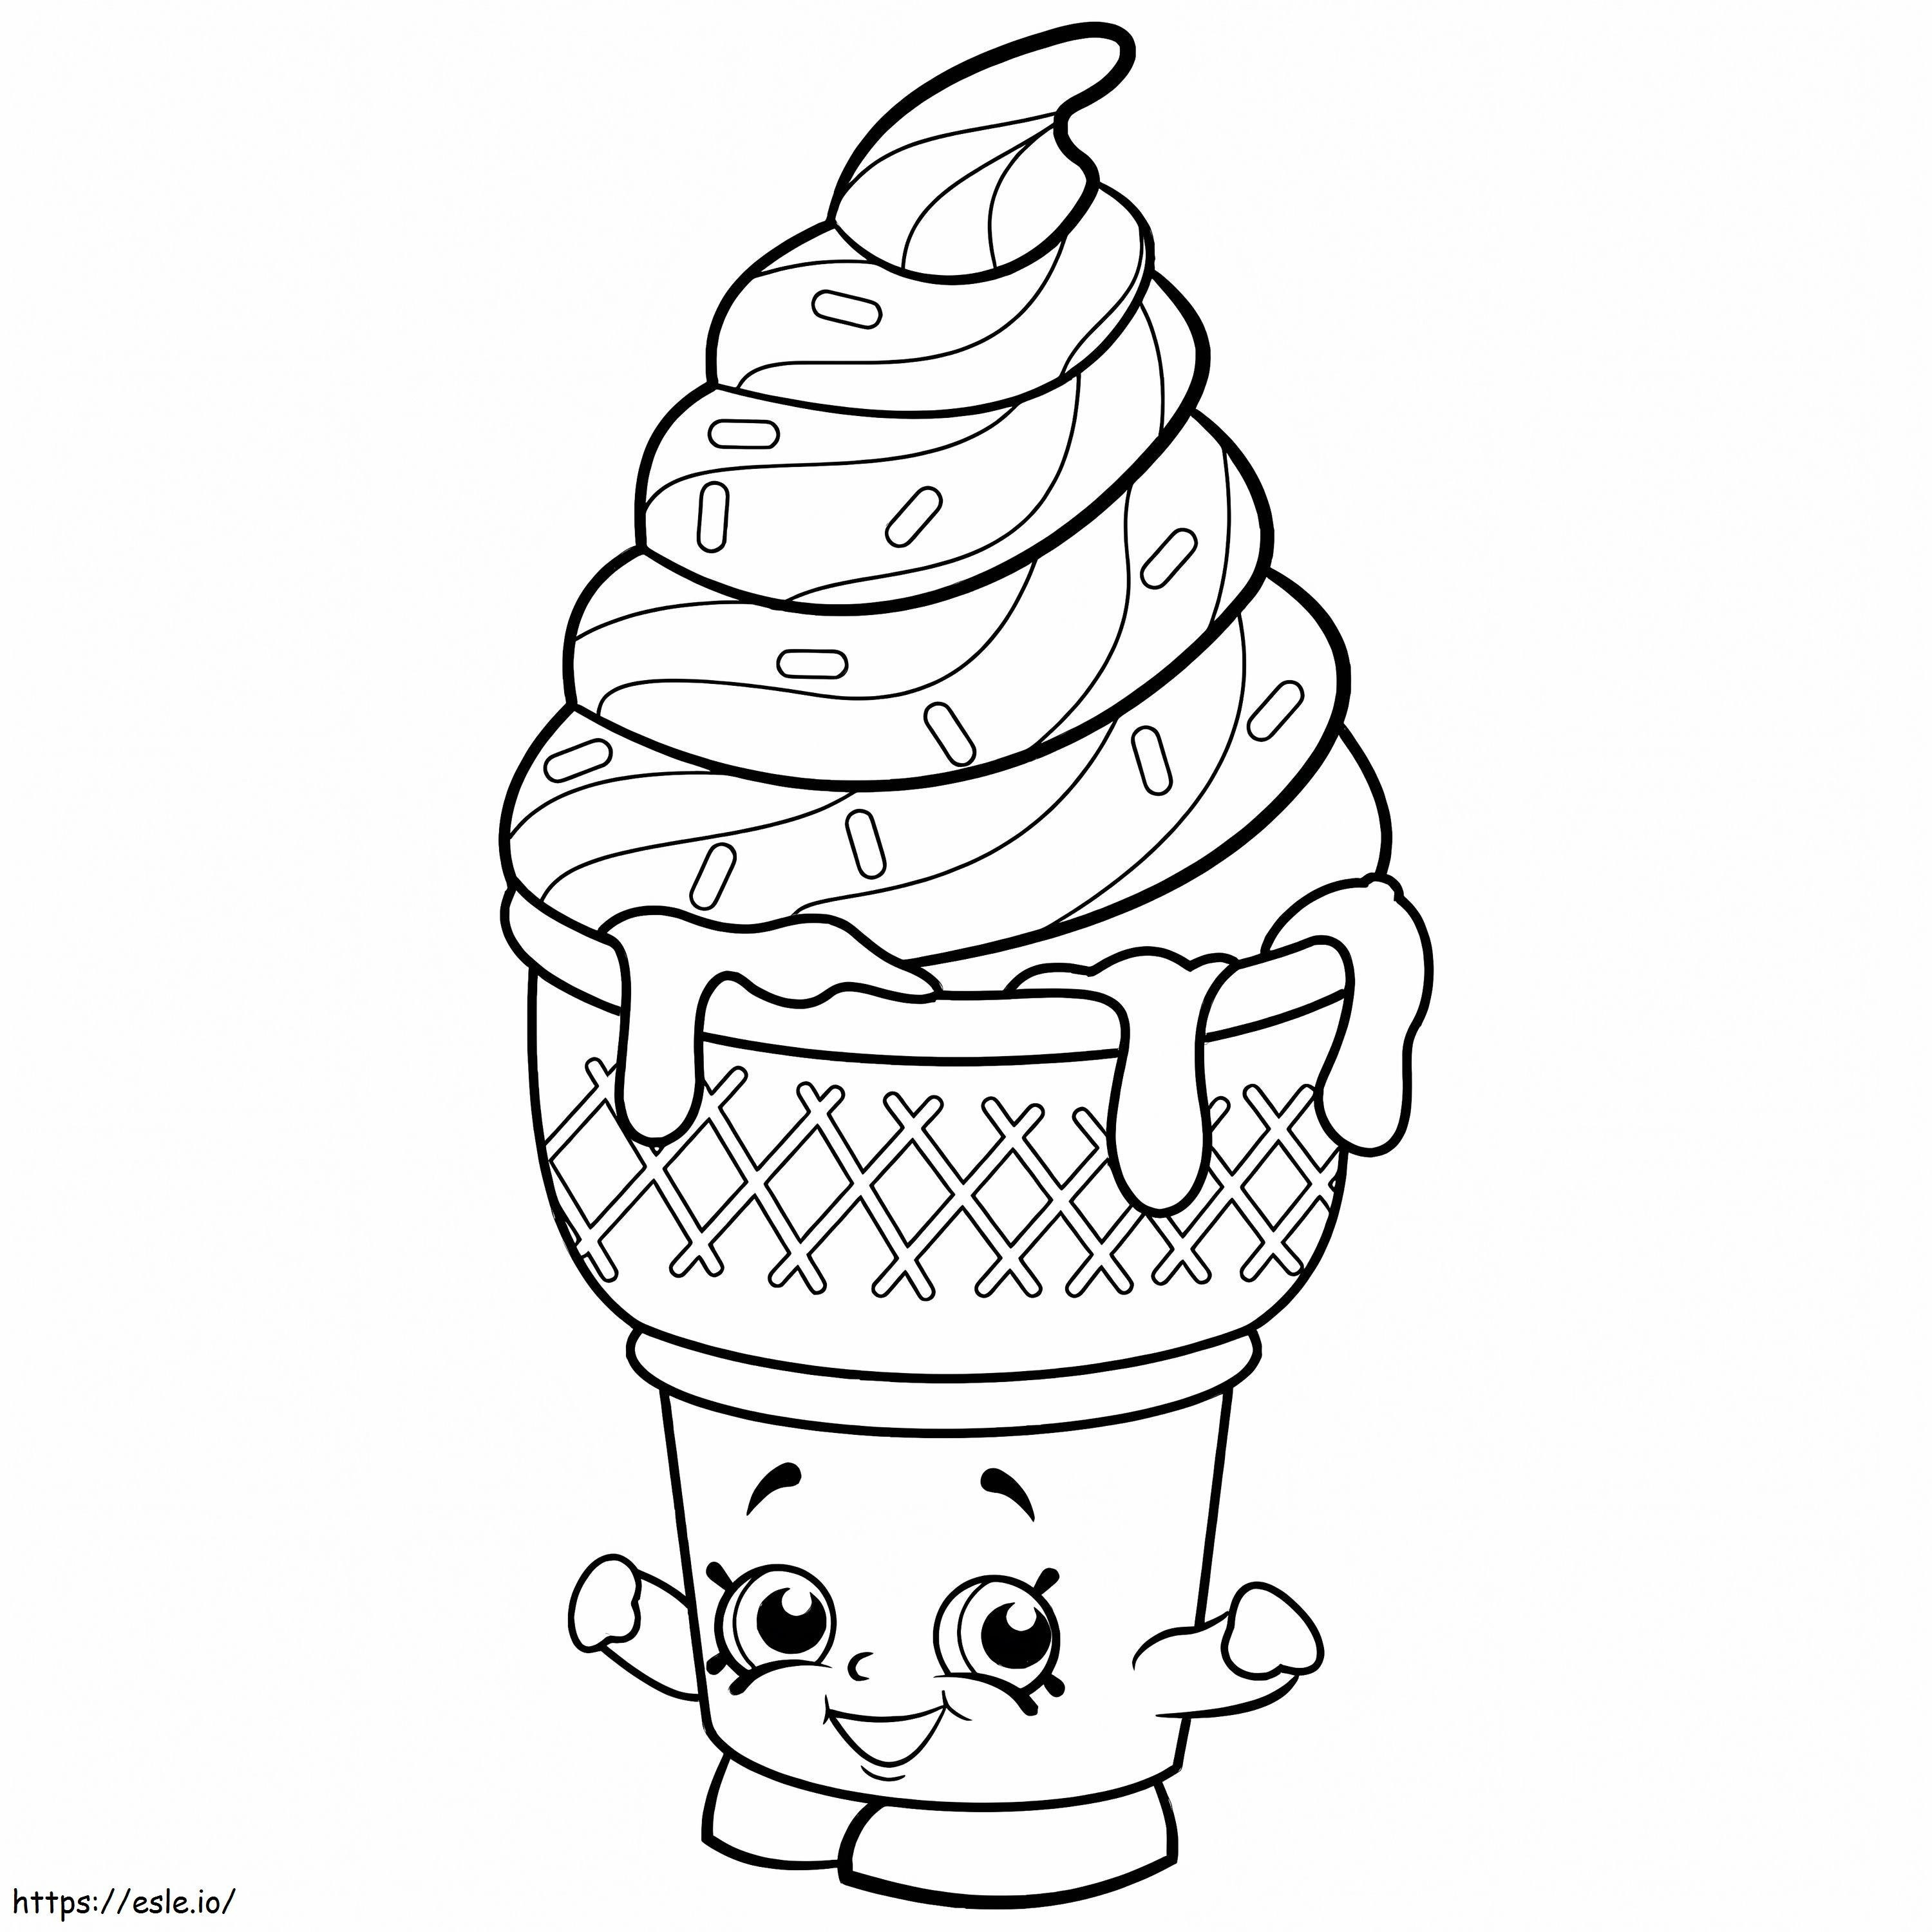 Shopkins de sonho de sorvete doce para colorir